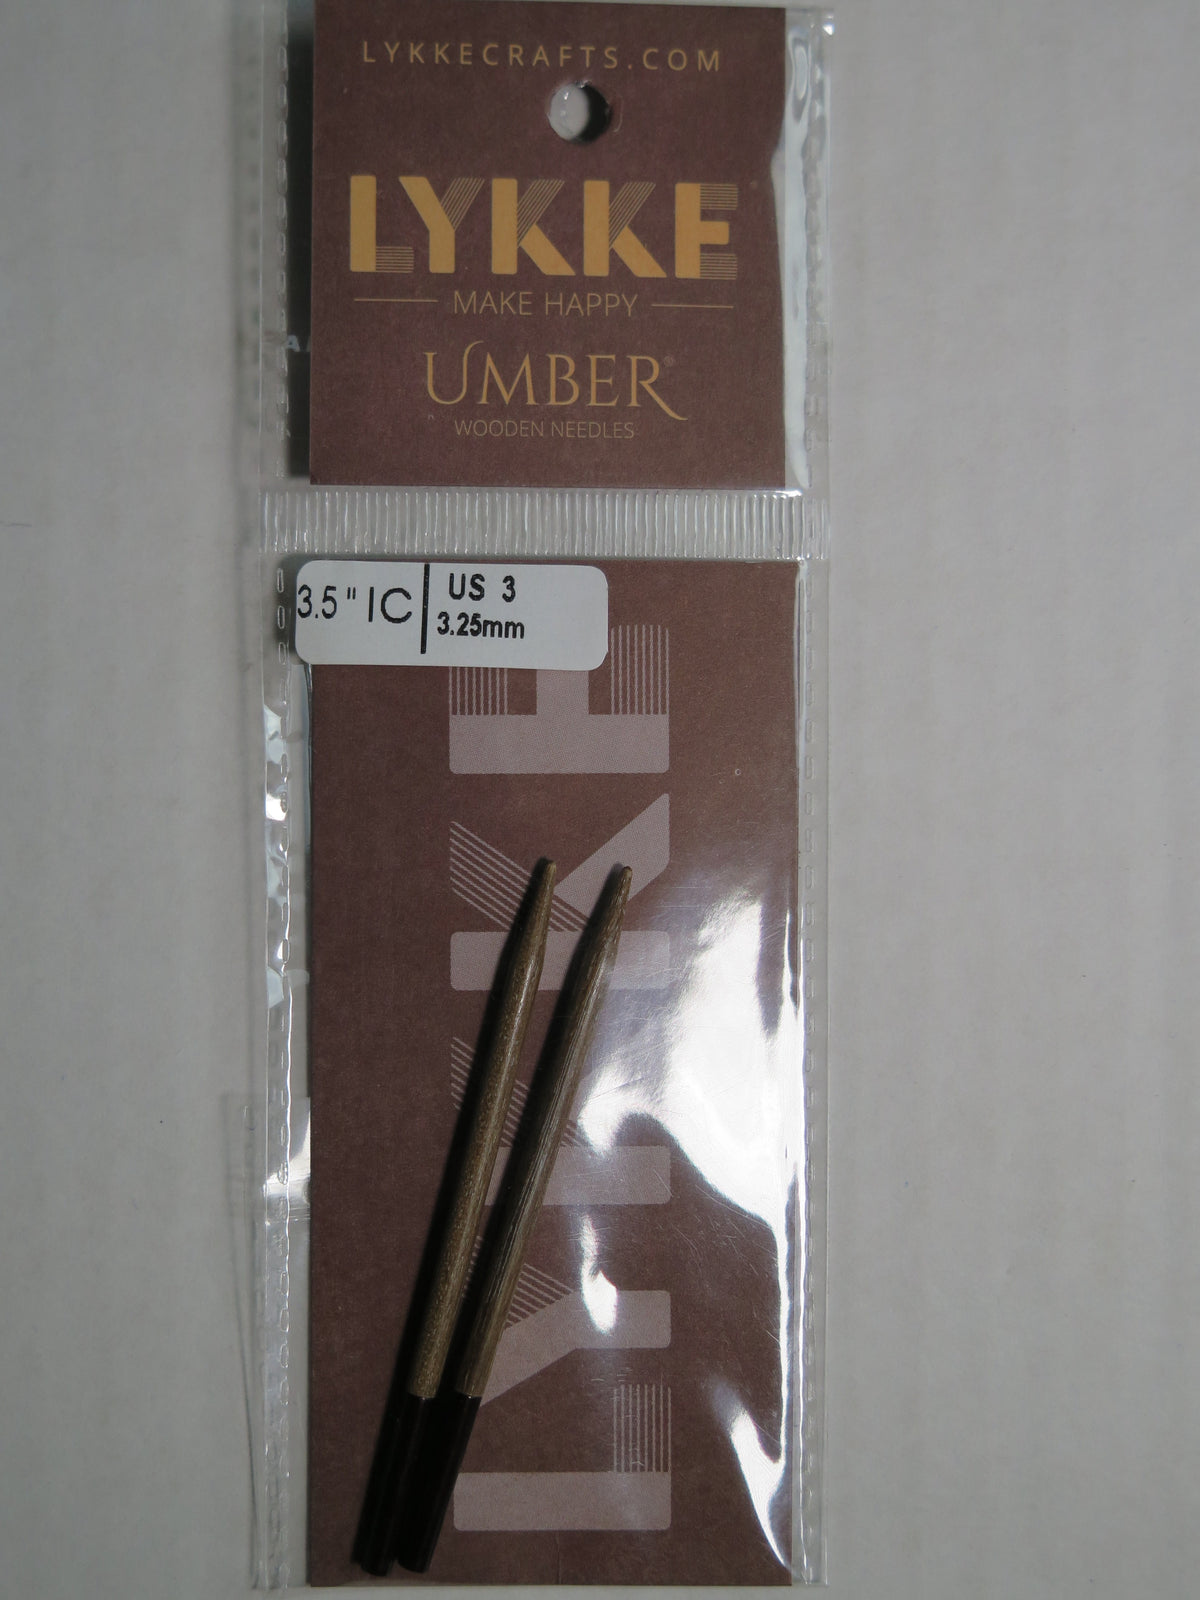 Lykke Umber 3.5in Interchangeable Needle Tips - US3 3.25mm